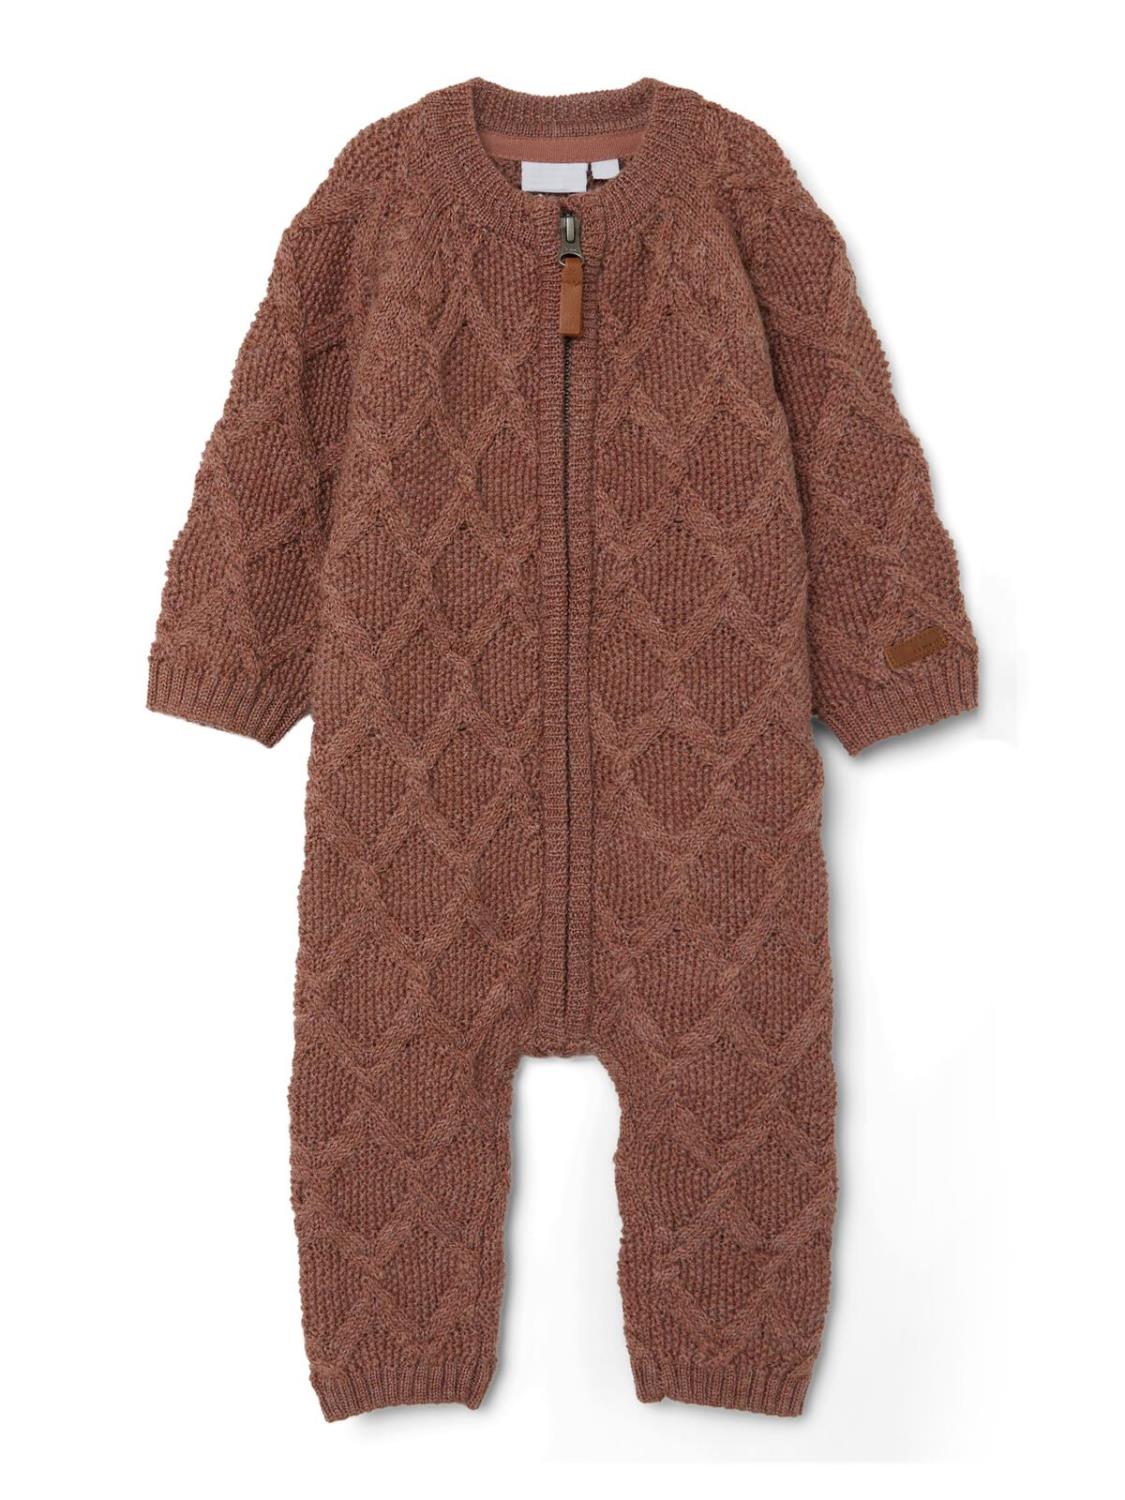 Wrilla Wool Knit Suit, Baby - Cognac